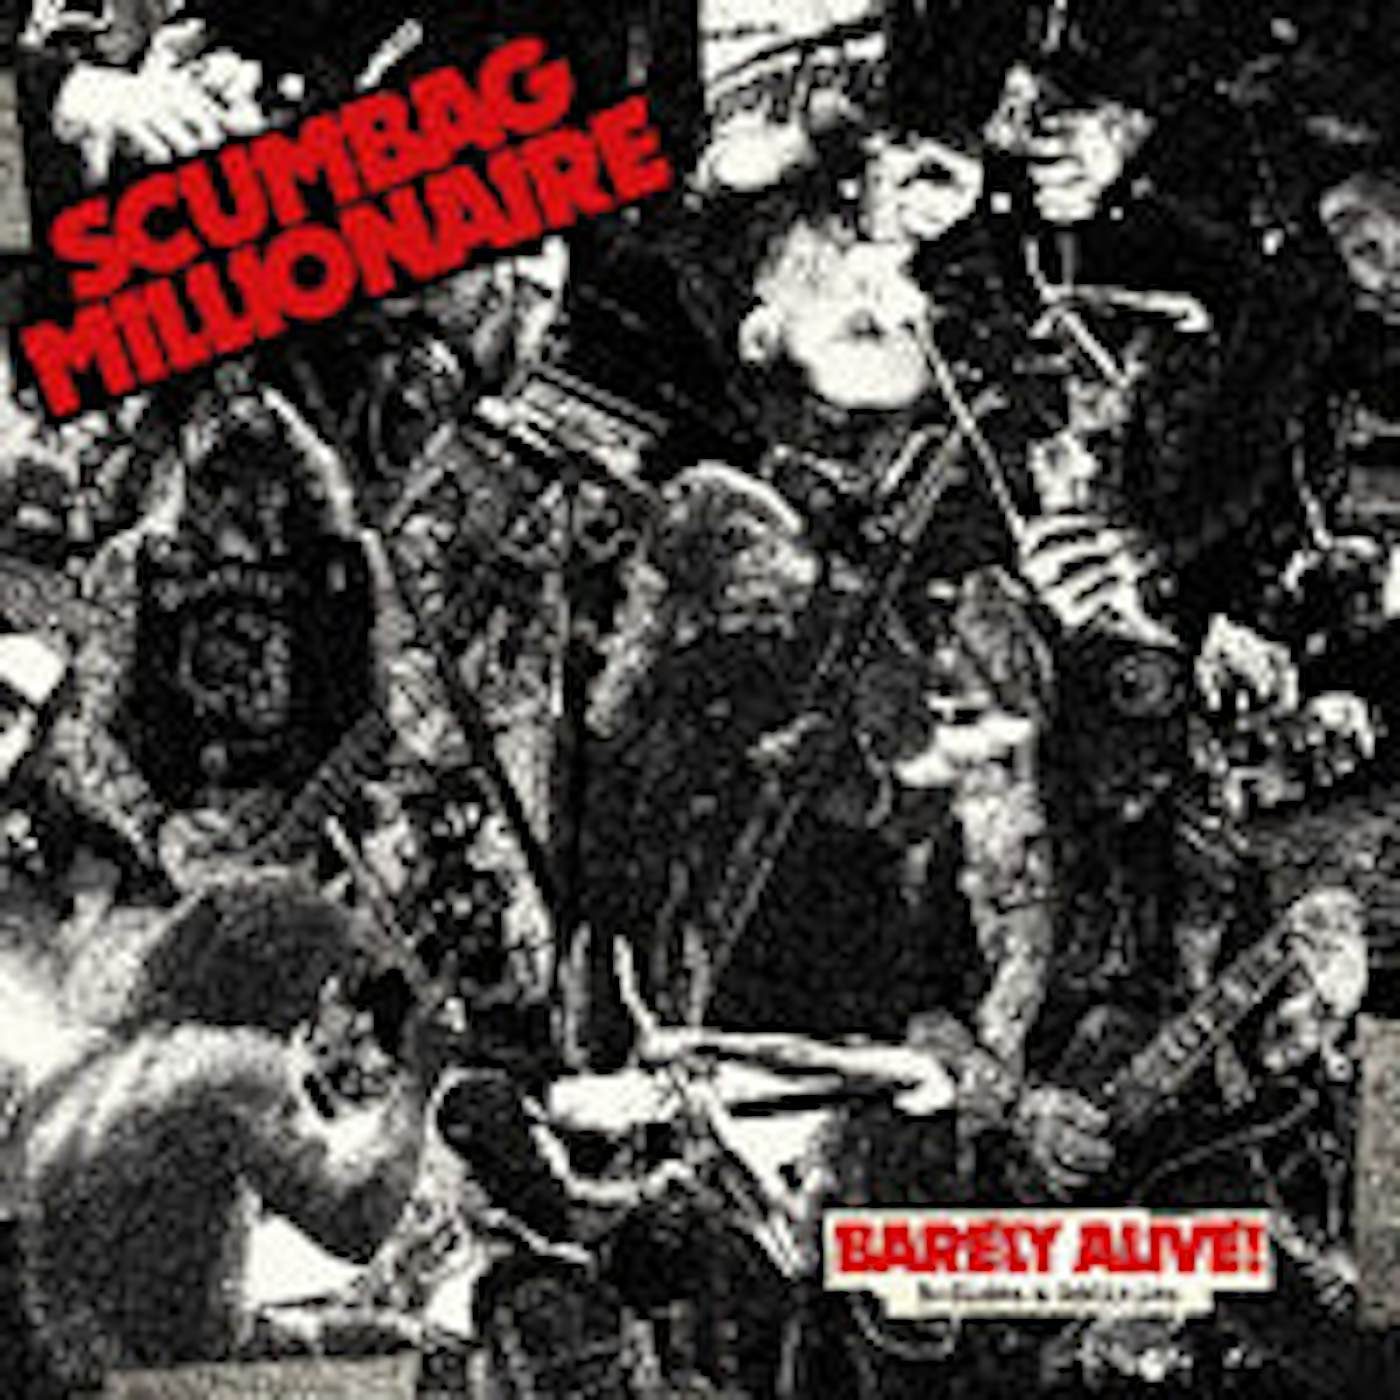 Scumbag Millionaire LP - Barely Alive! B-Sides & Oddities (Vinyl)